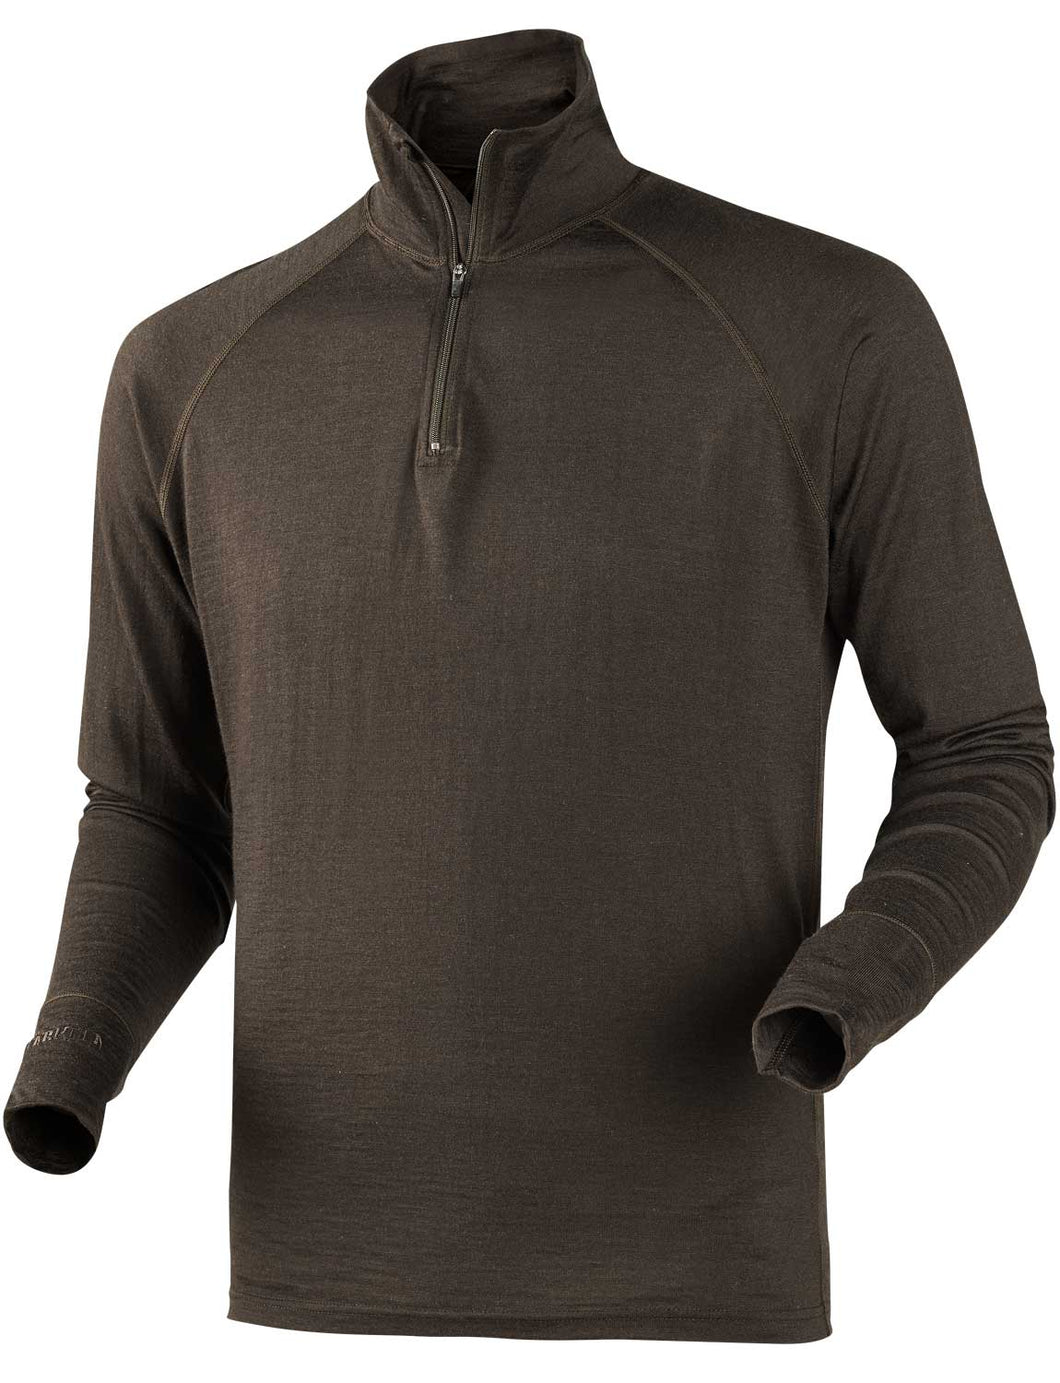 HARKILA Shirts - Mens All Season Undershirt Zip-Neck - Shadow Brown